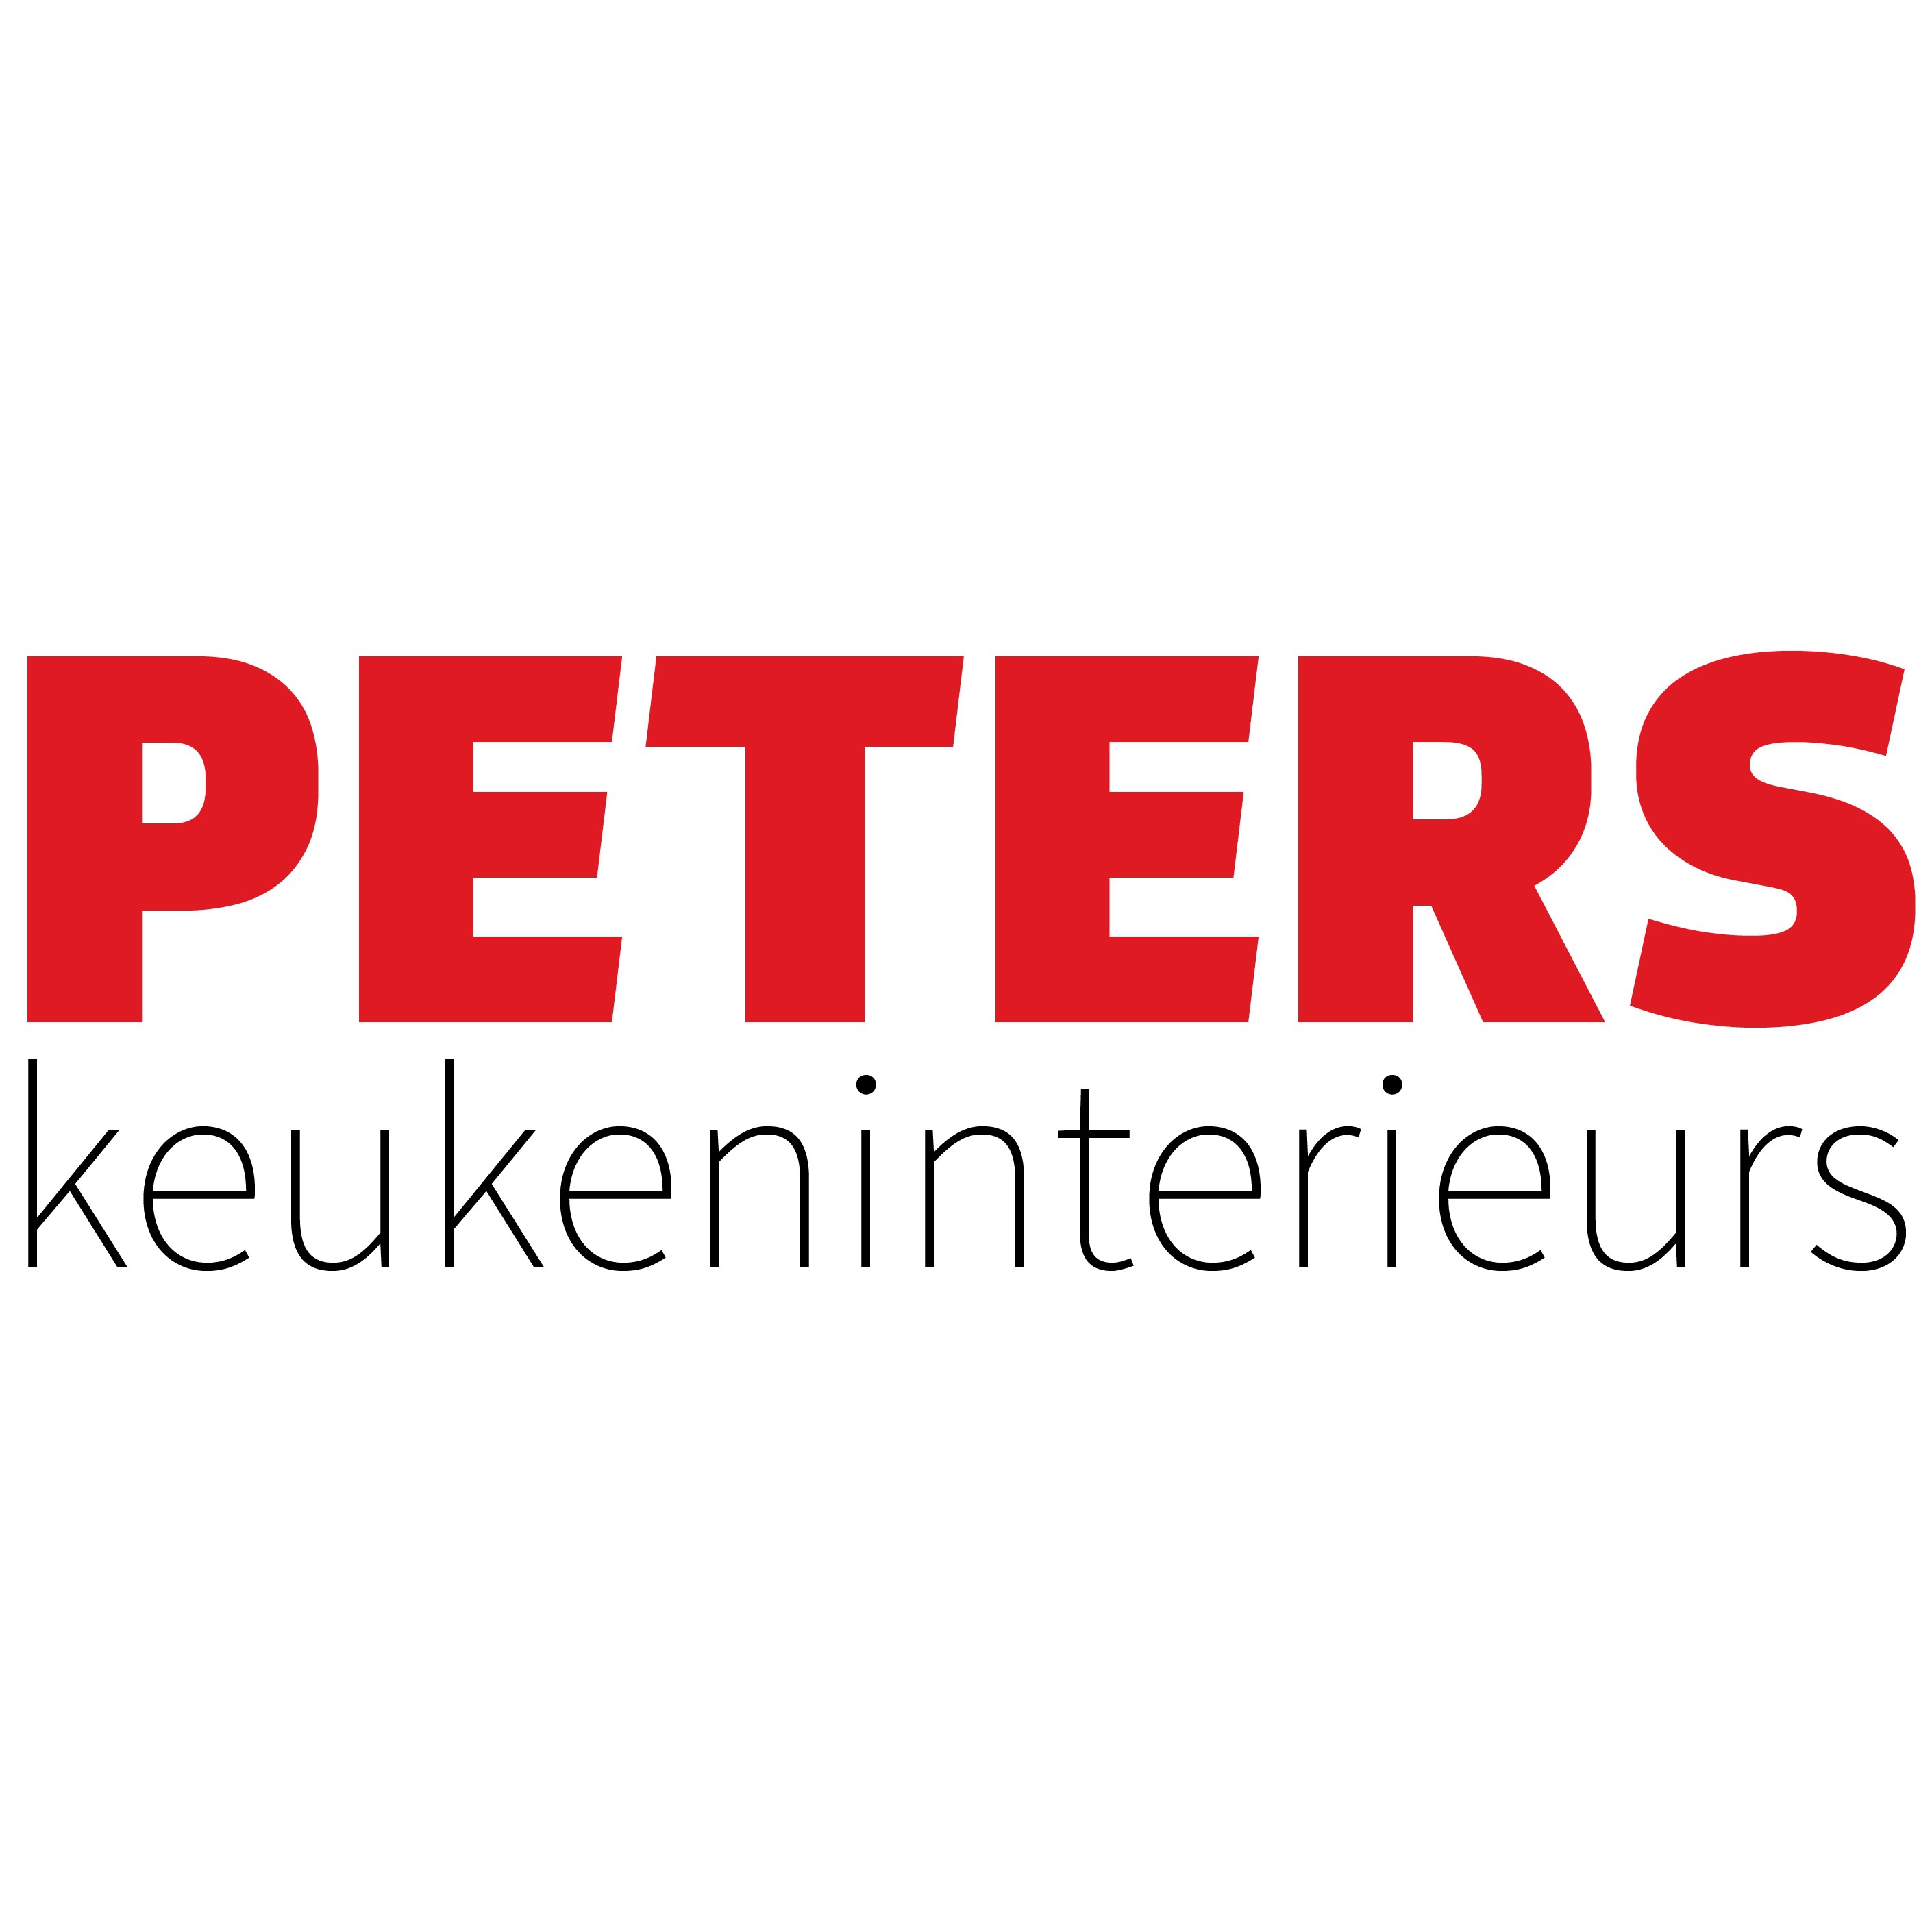 Peters Keukeninterieurs BV Logo